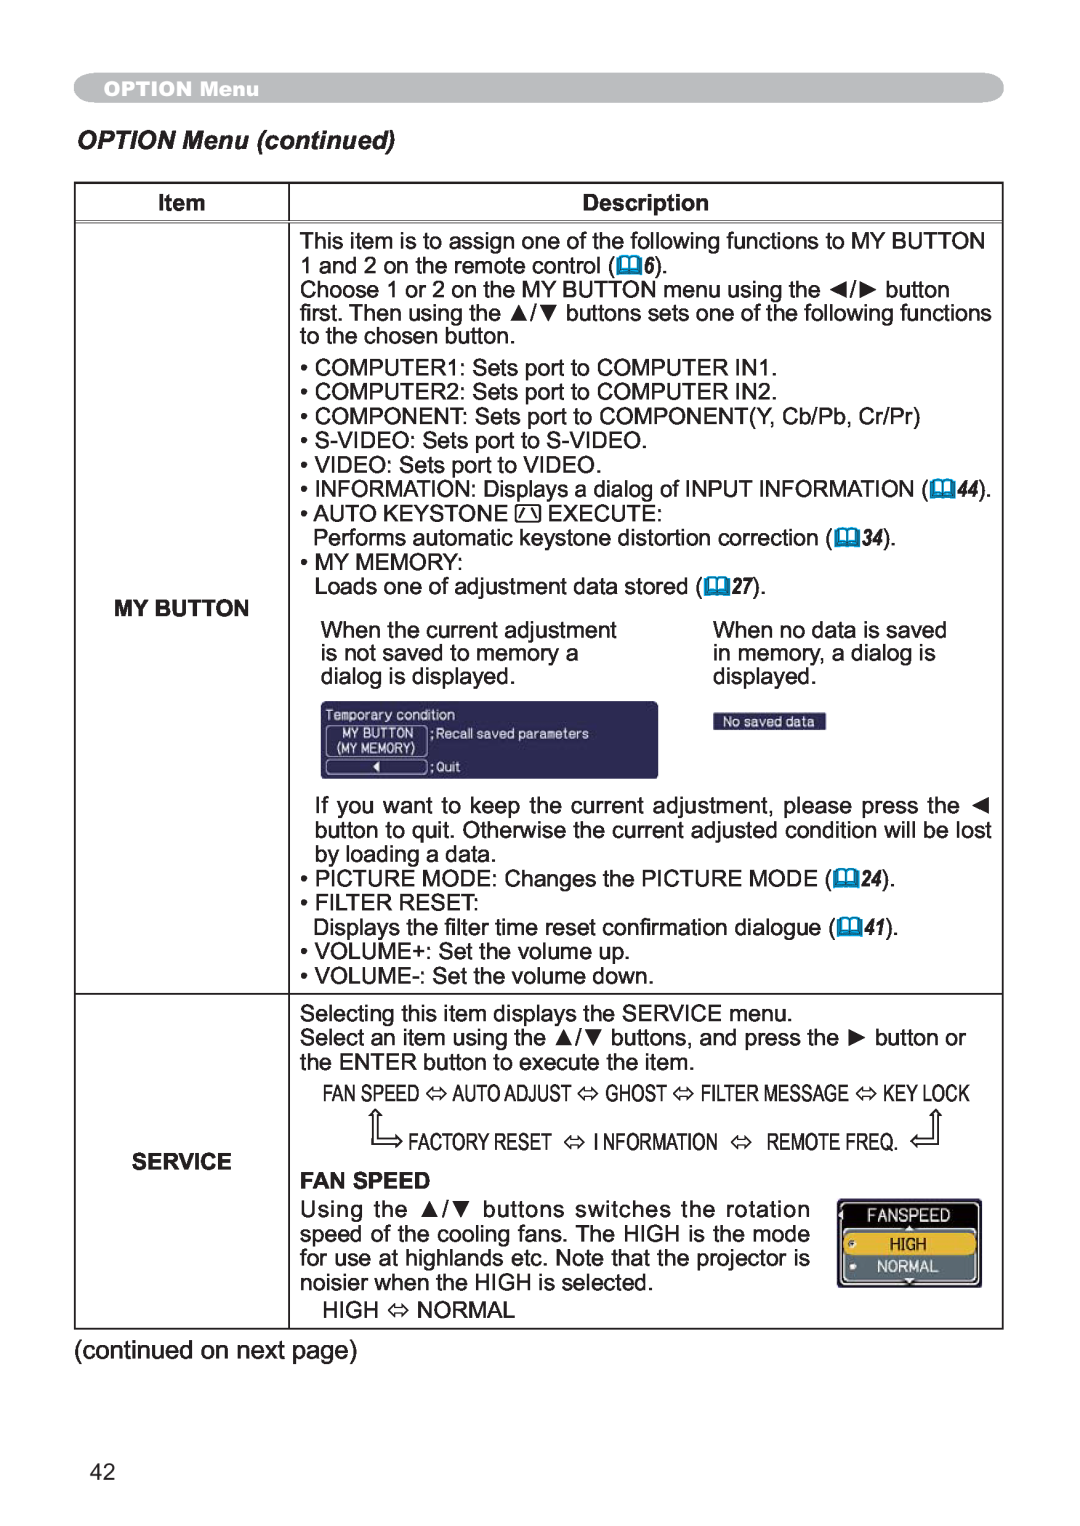 Hitachi ED-X32 user manual My Button, Service Fan Speed, OPTION Menu continued, FrqwlqxhgRqQhwSdjh, Description 